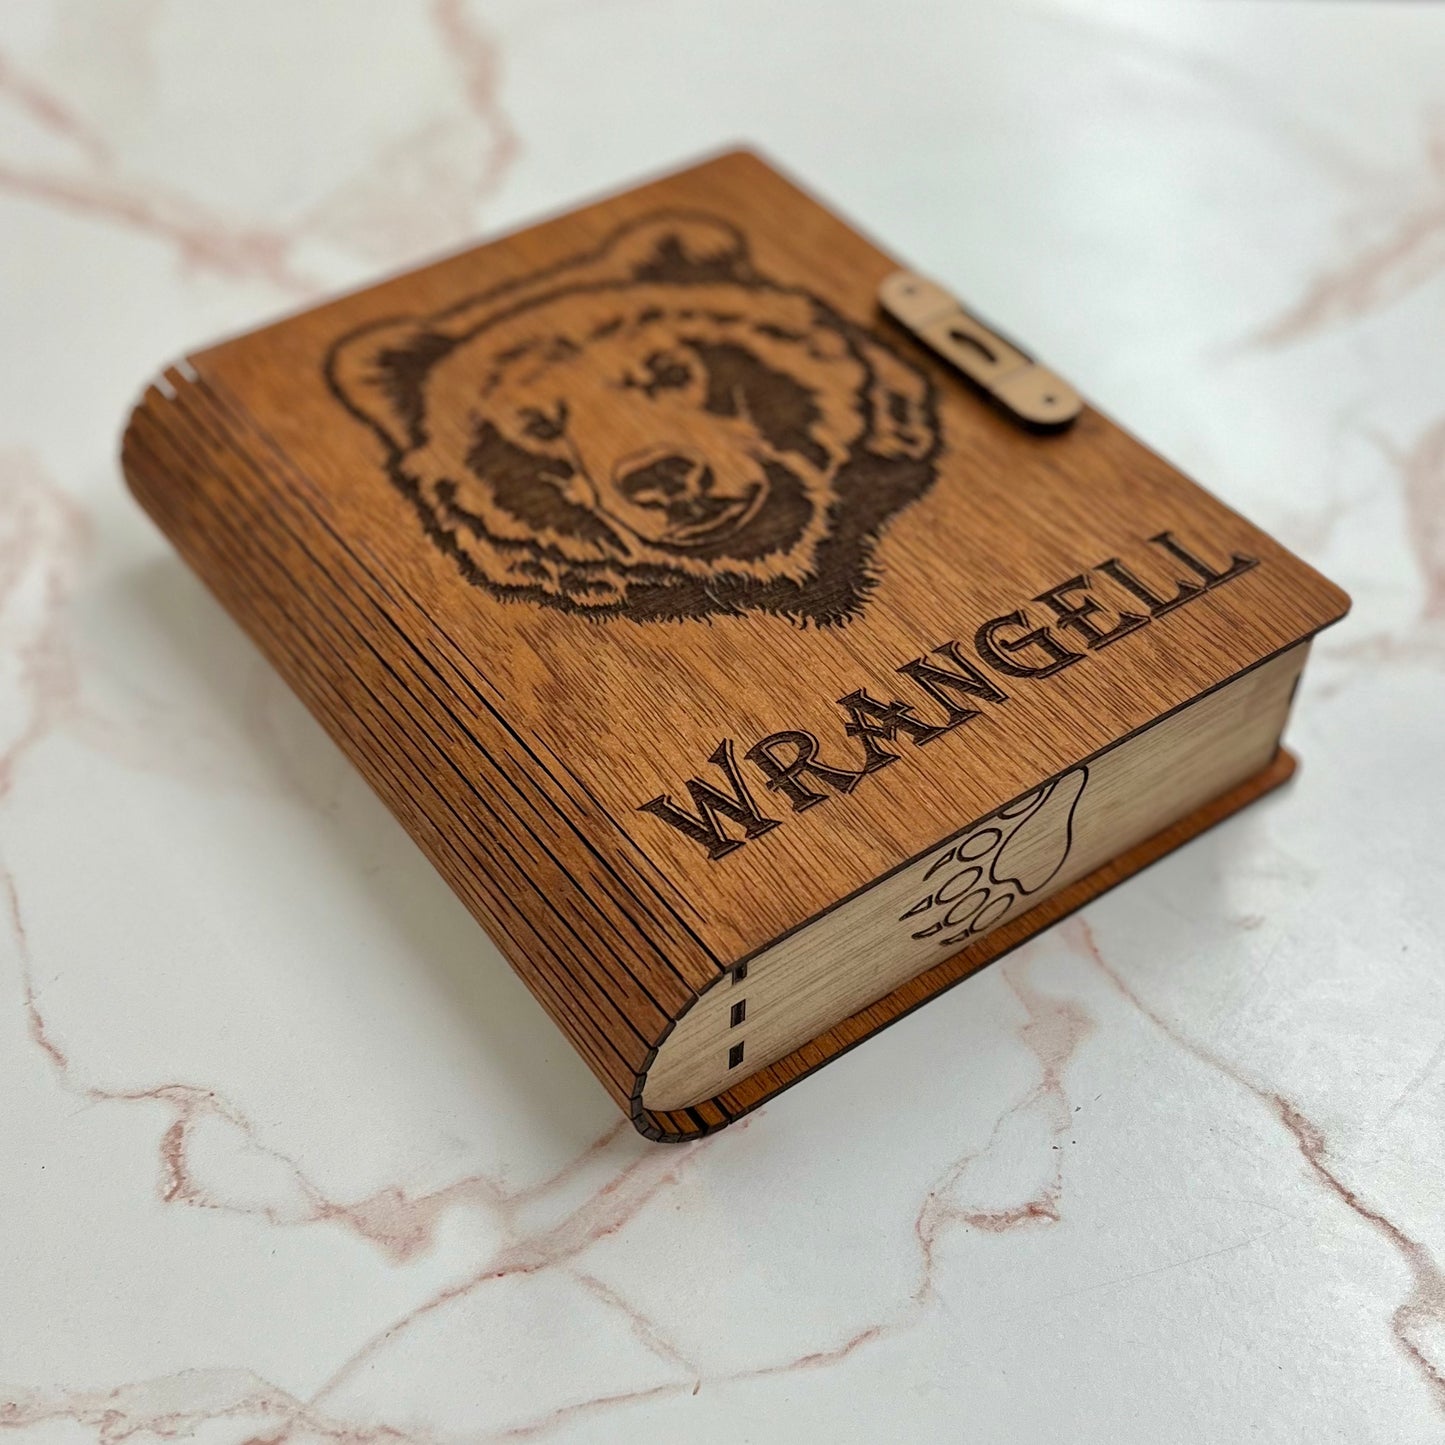 Bear Book Box